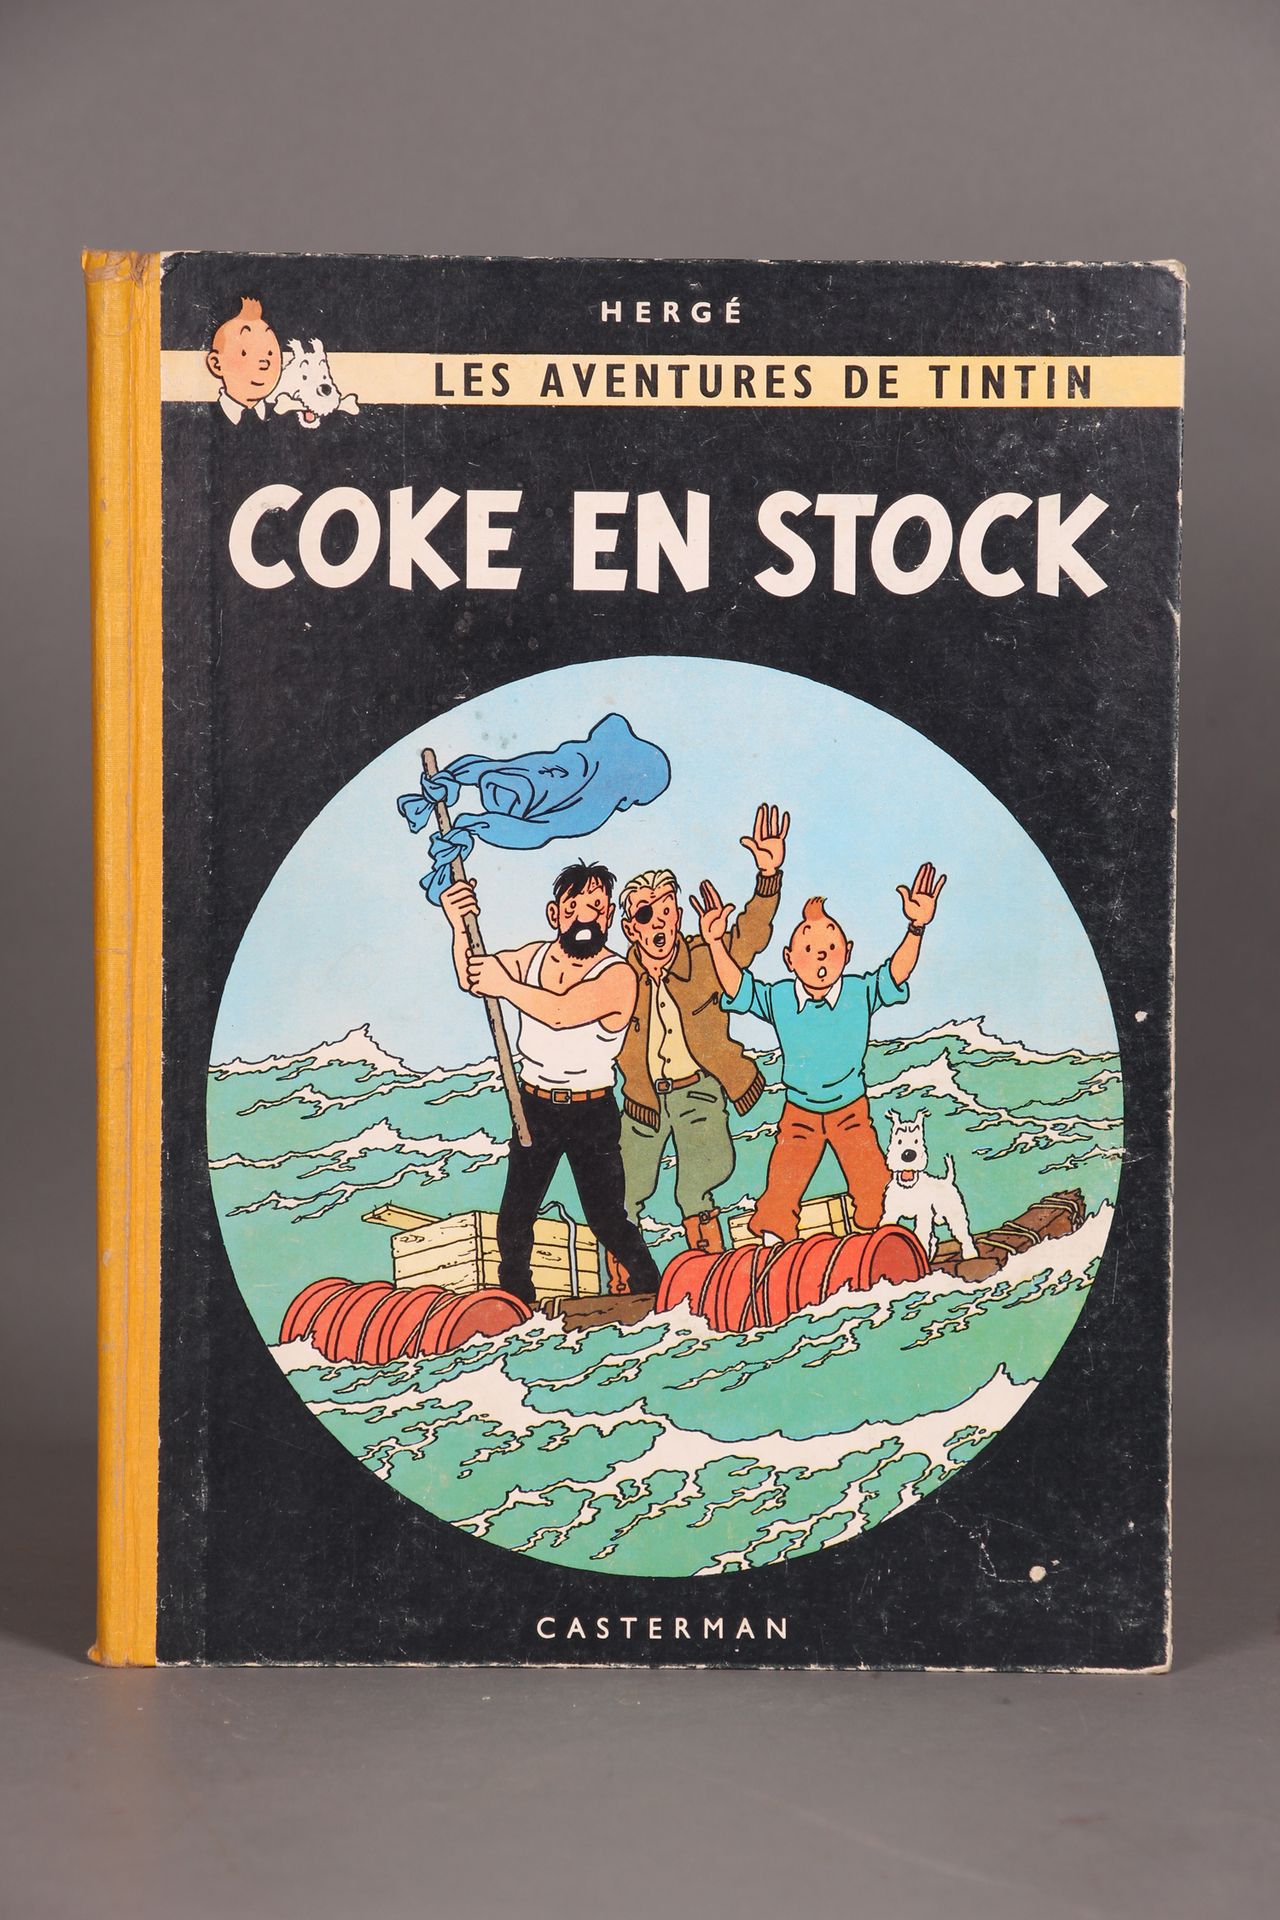 [TINTIN]. HERGÉ. "Coke en stock" Casterman, 1958. Primera edición belga. Lomo am&hellip;